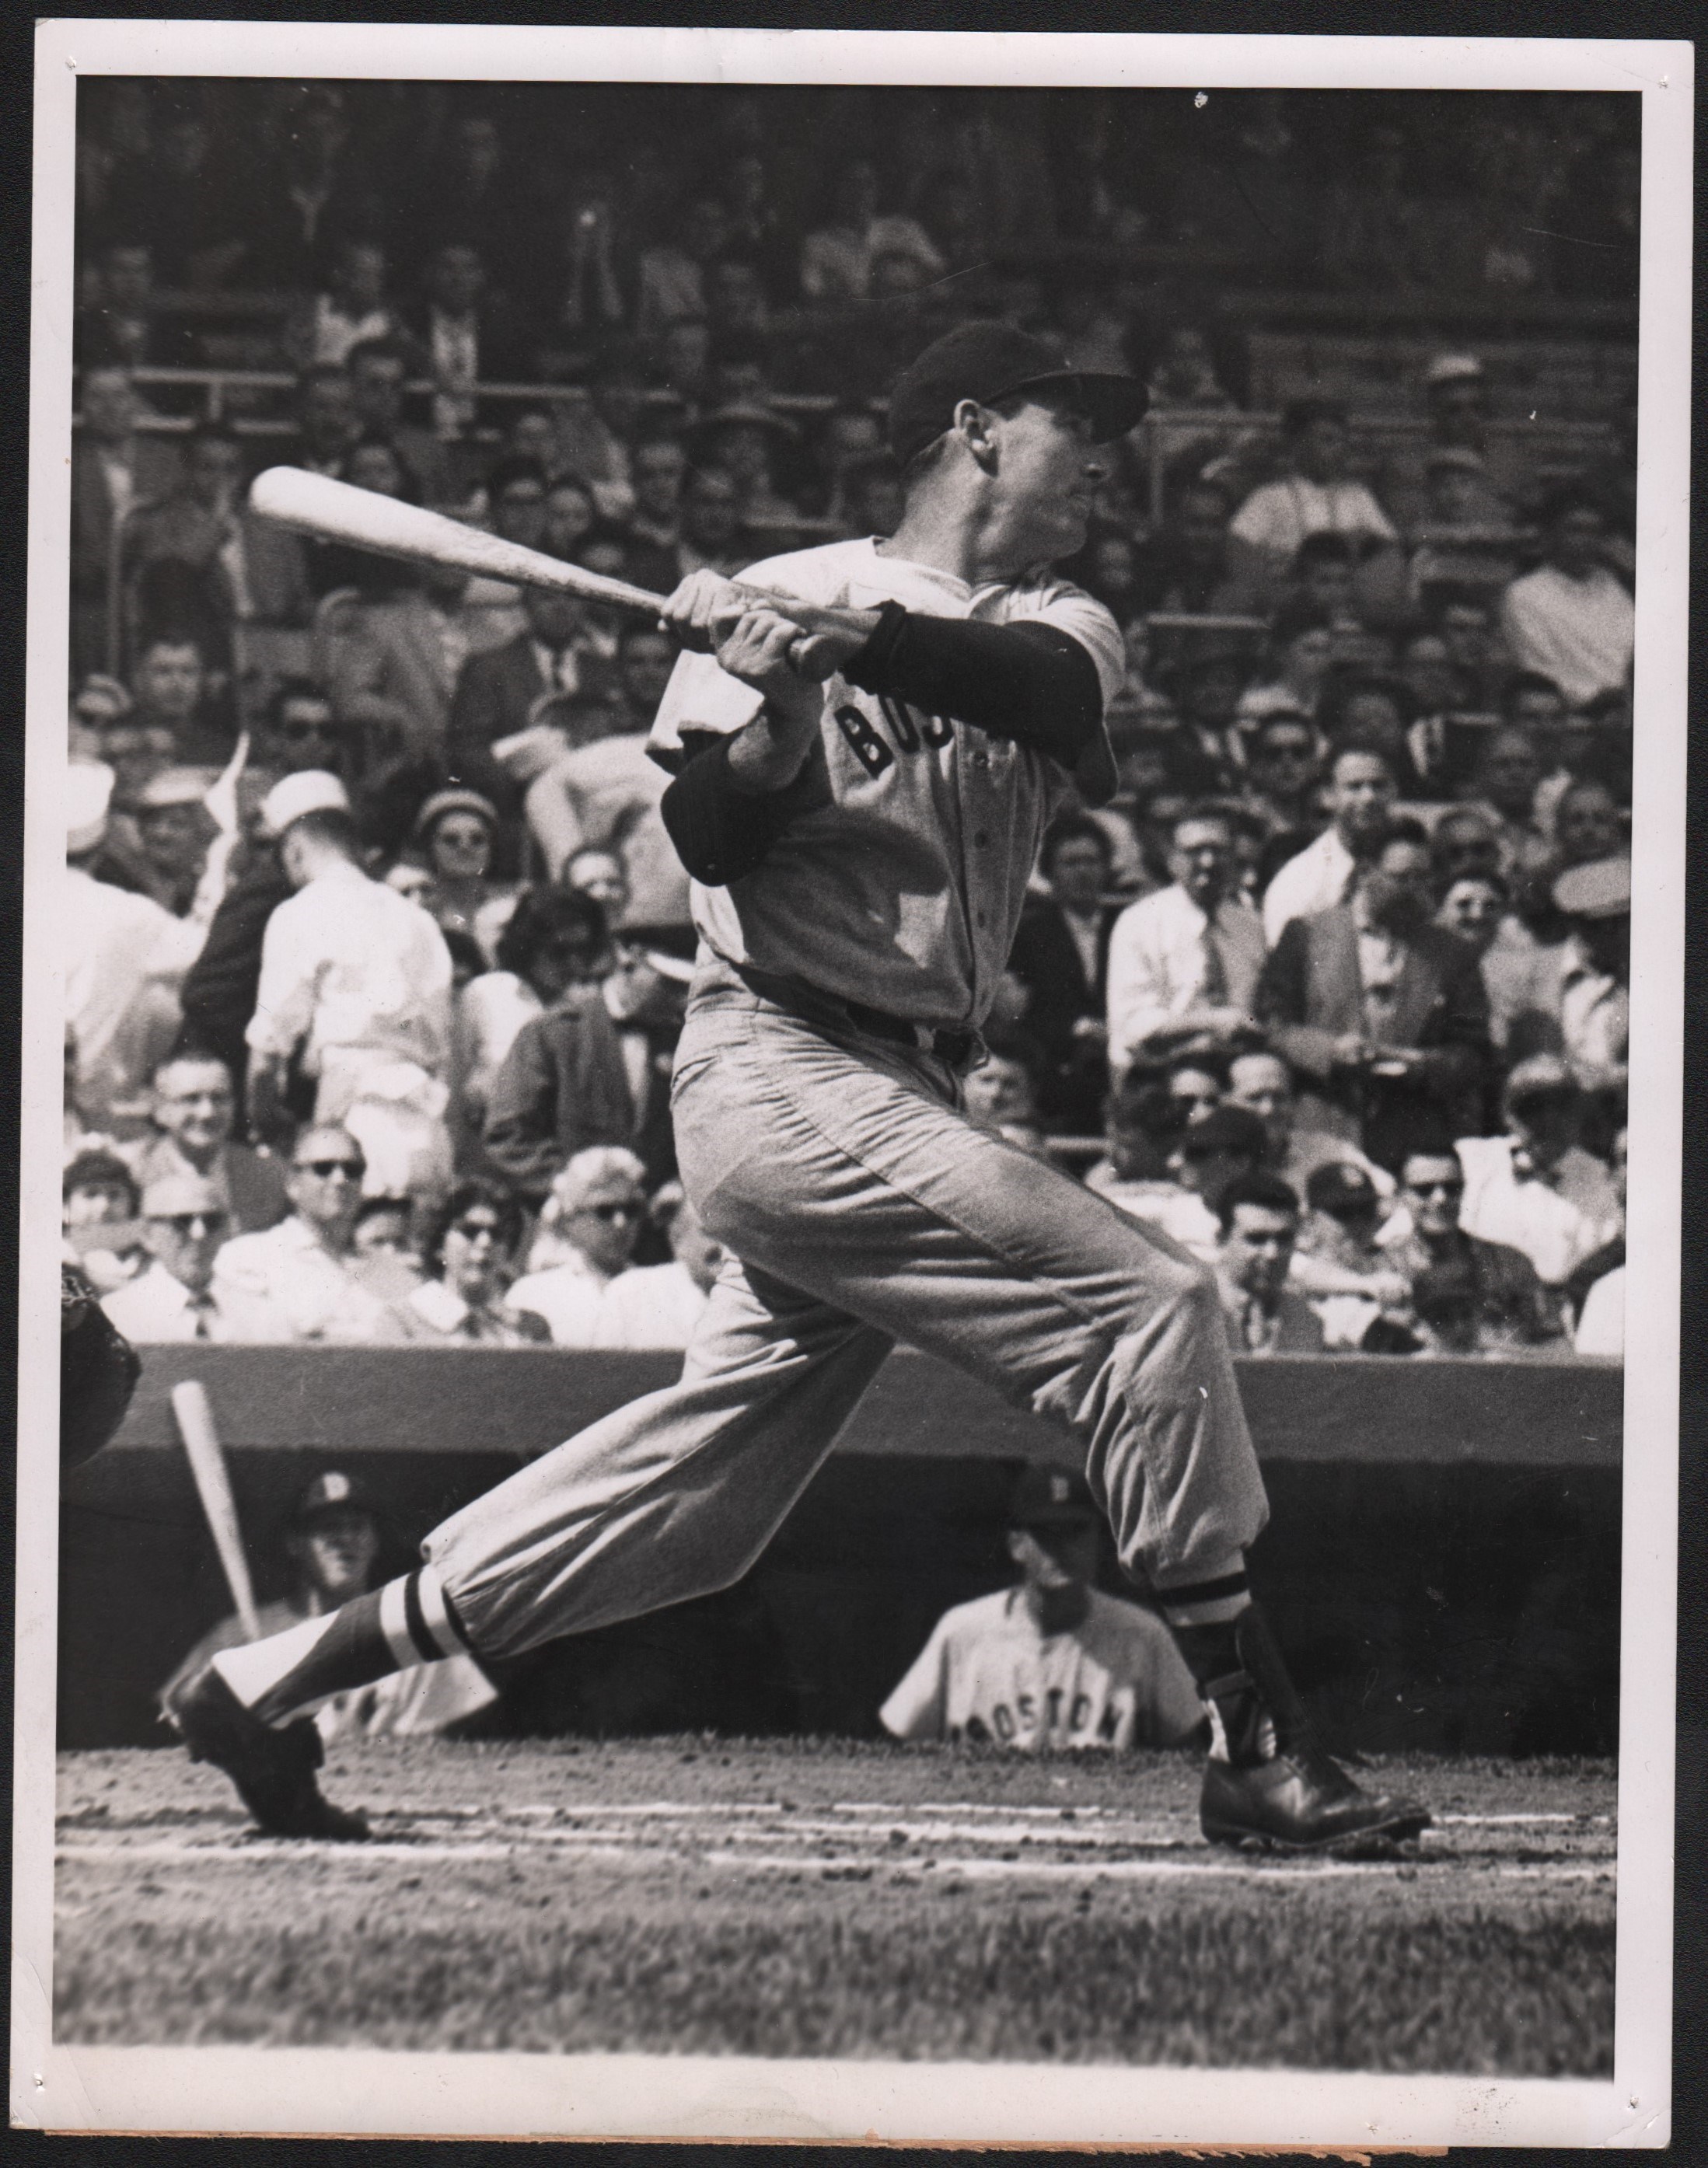 1957 Ted Williams ".405" at Yankee Stadium Type I Photograph